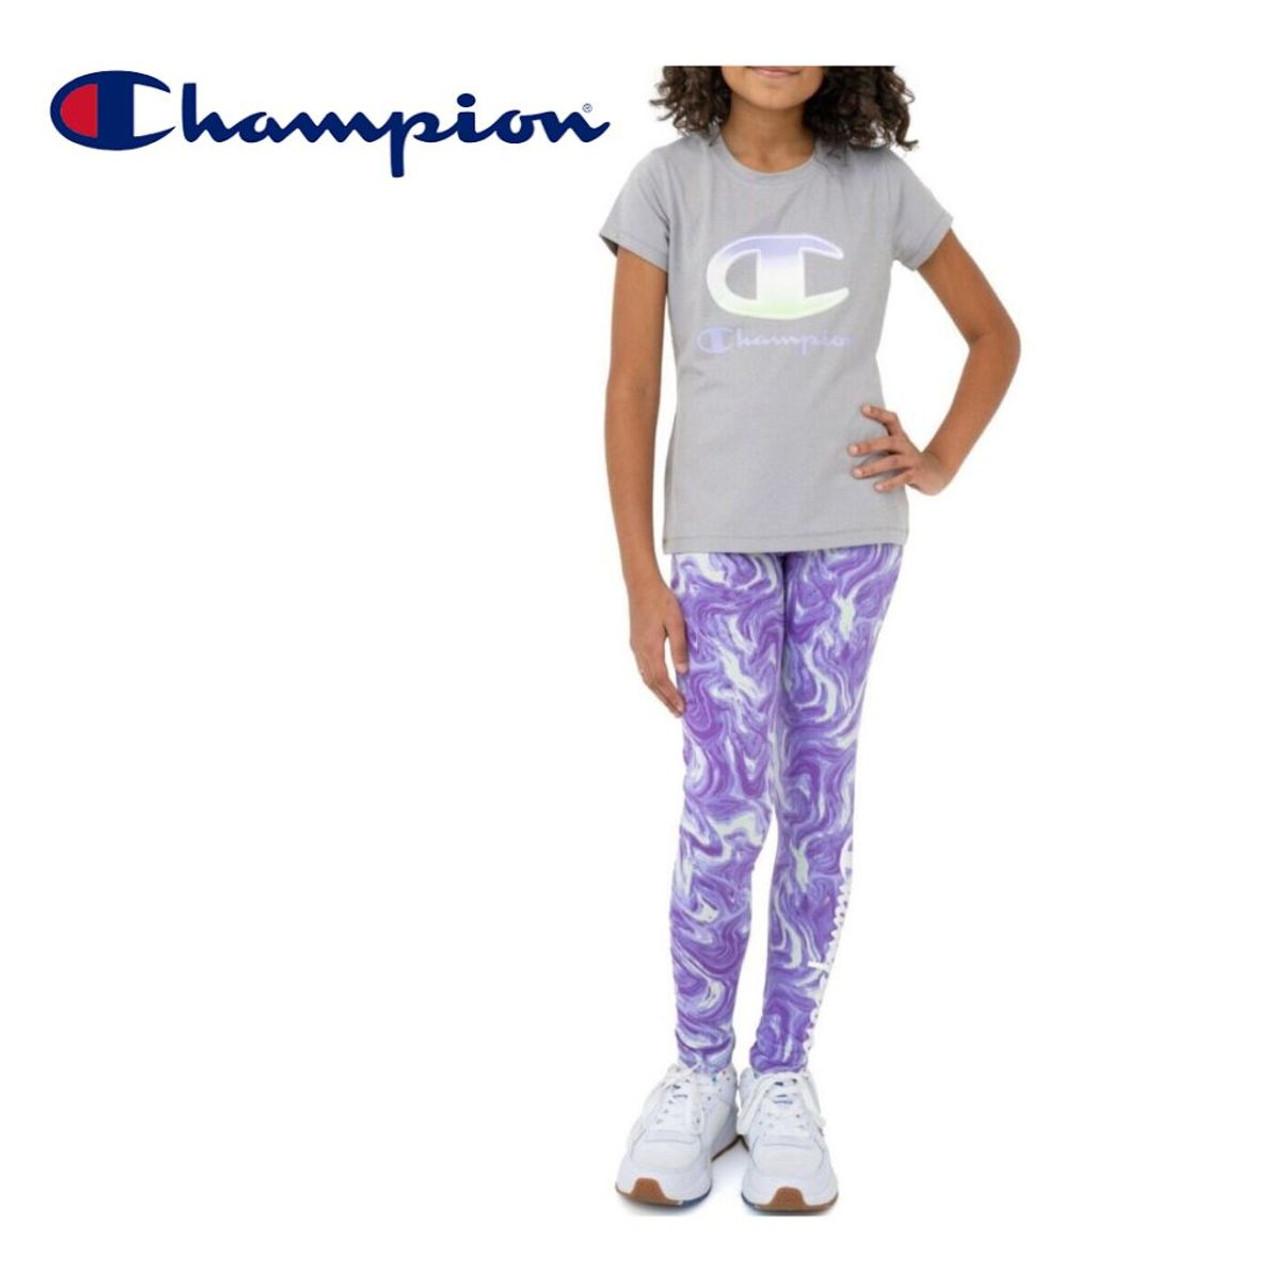 Champion Girl's T-Shirt and Leggings Set 